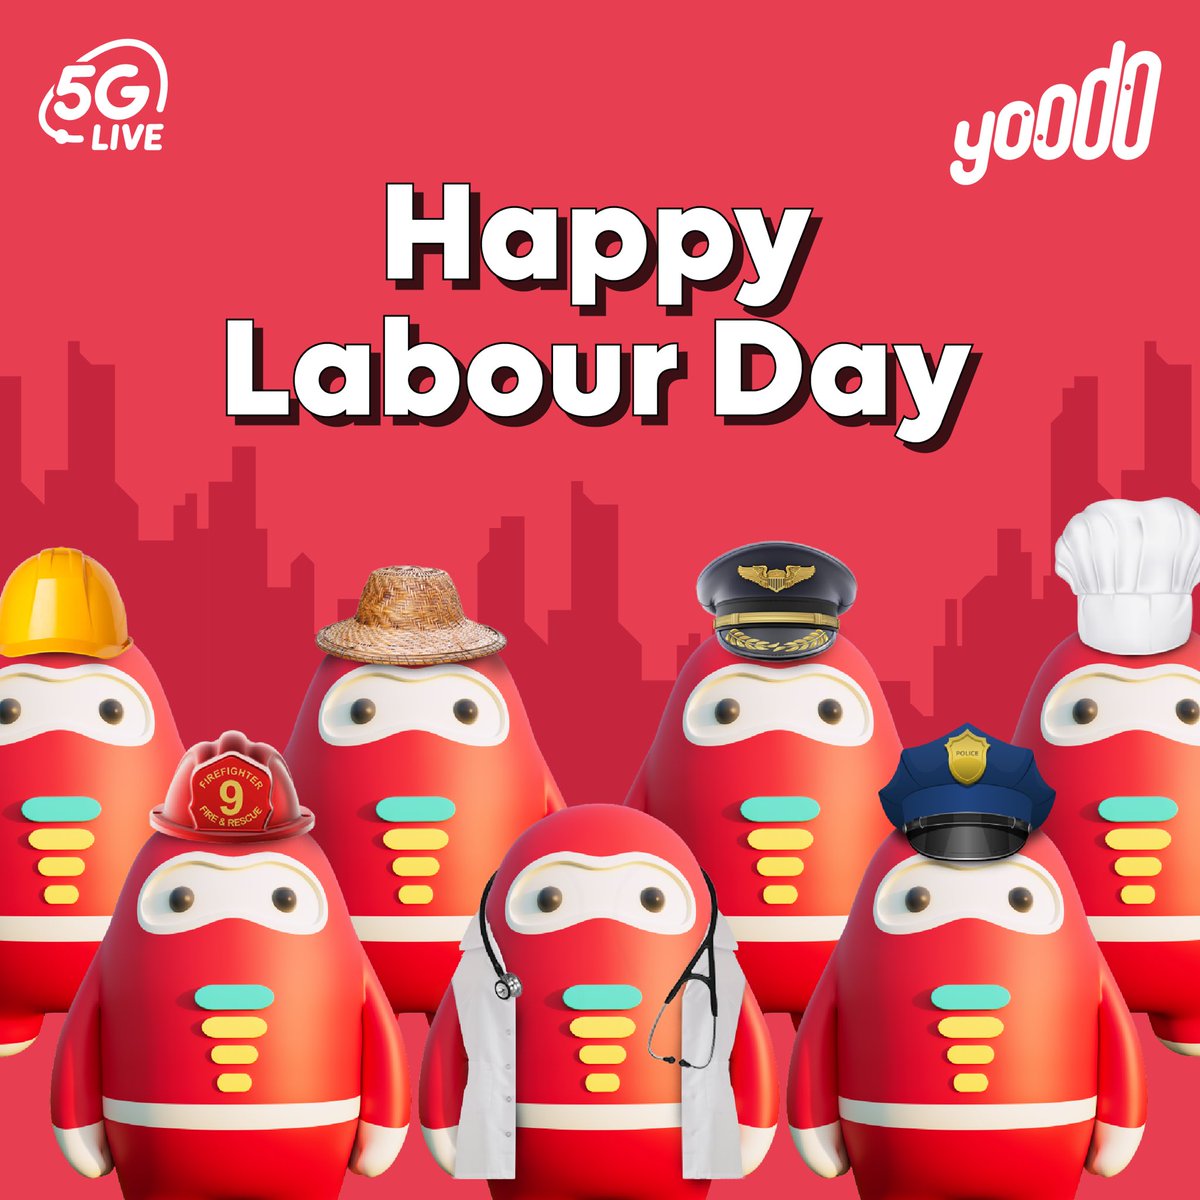 Happy Labour Day, guys! You guys kerja ke cuti ni? #yoodo #yoodoyou